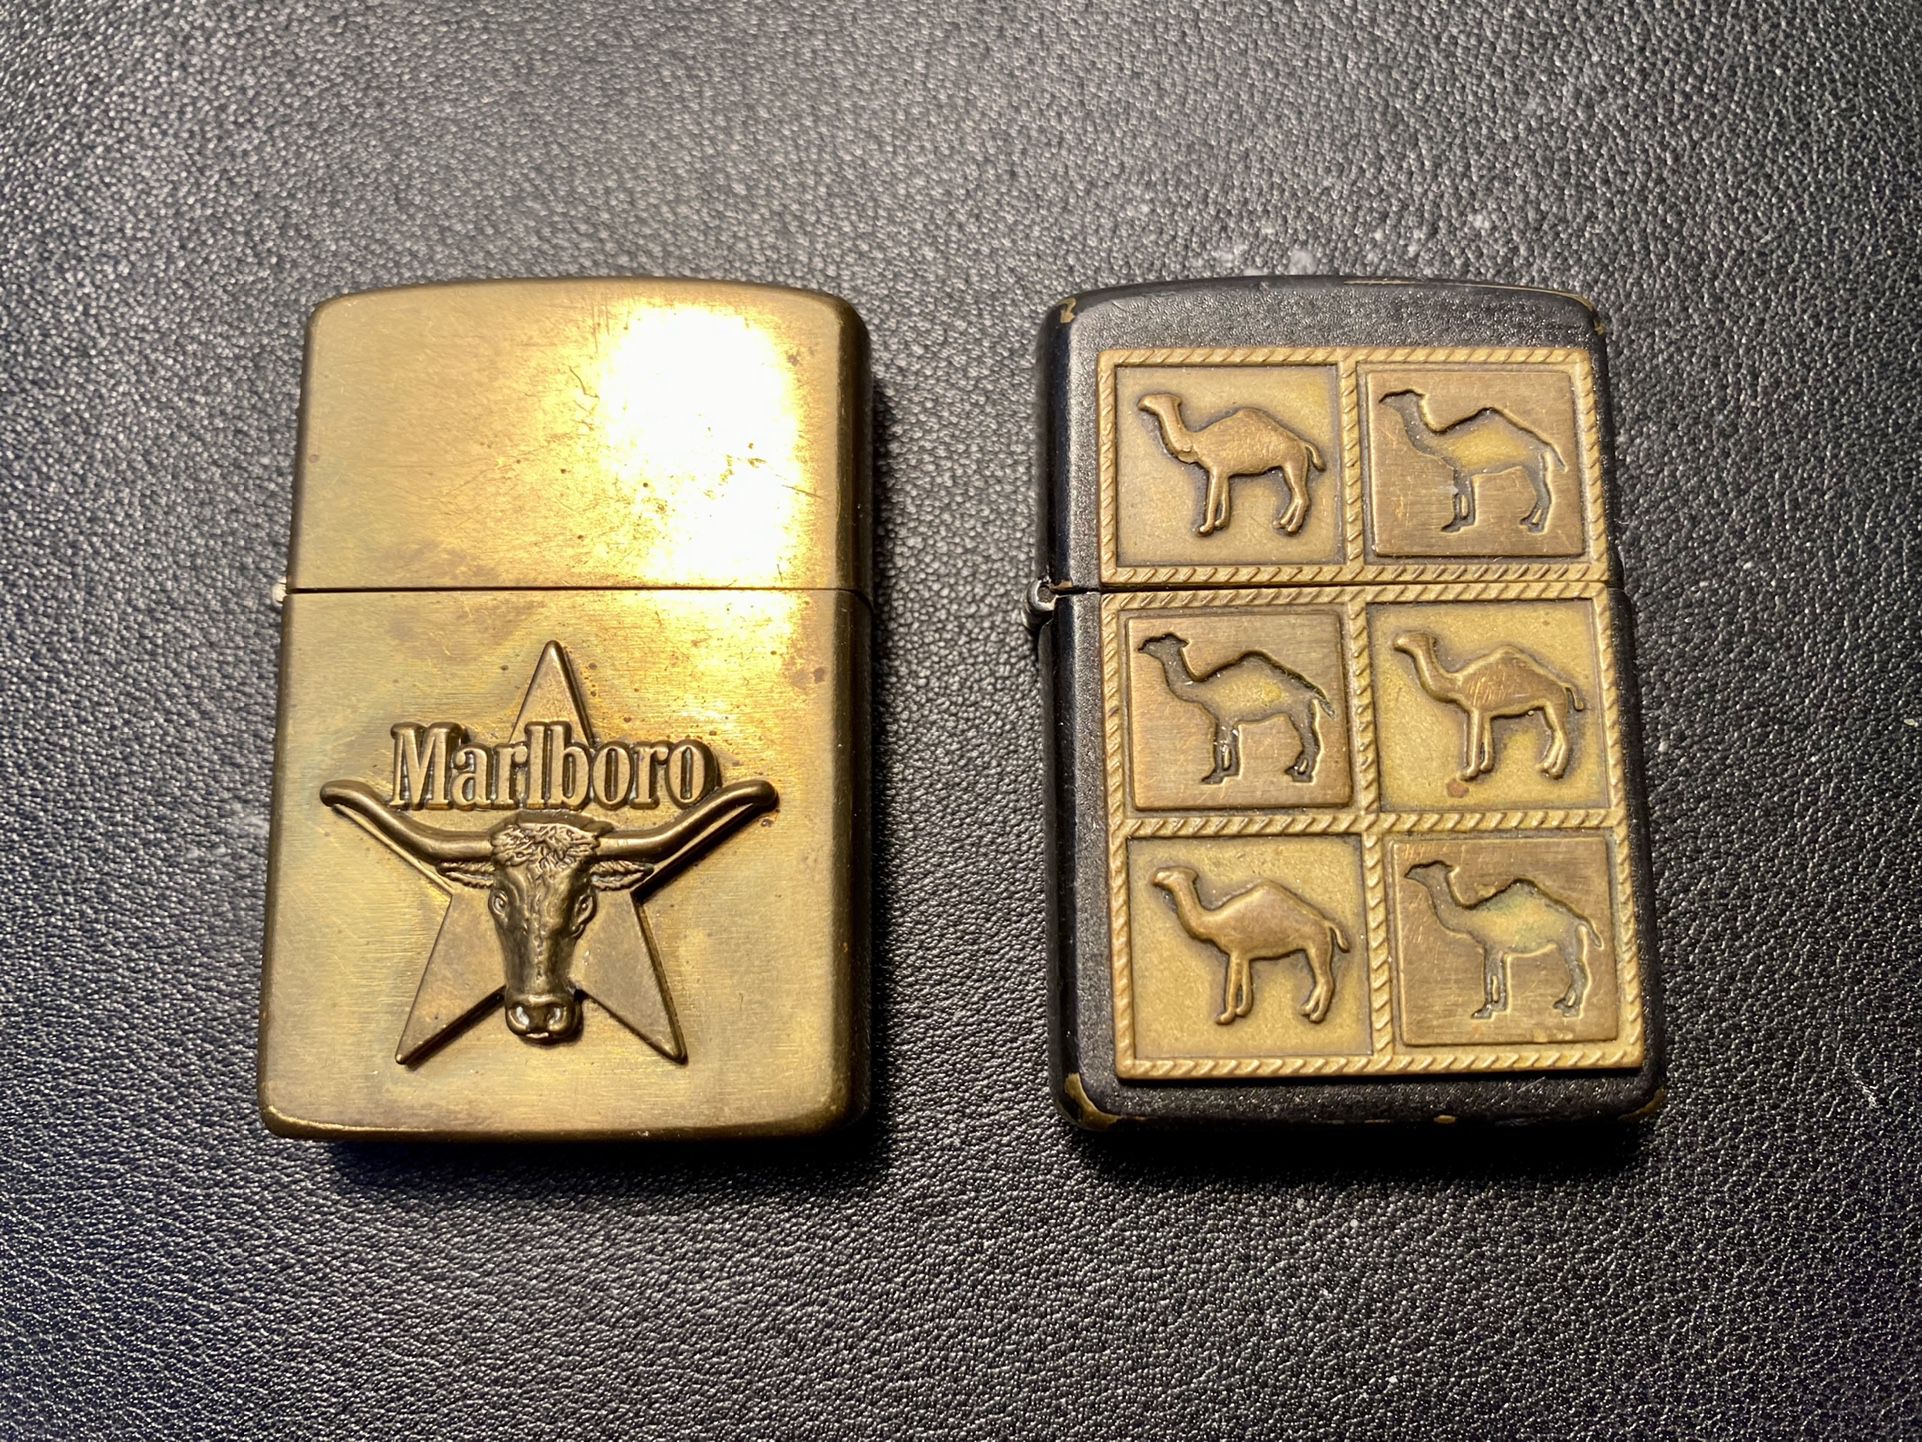 2 Rare Zippo Lighters Marlboro Longhorn And Camel